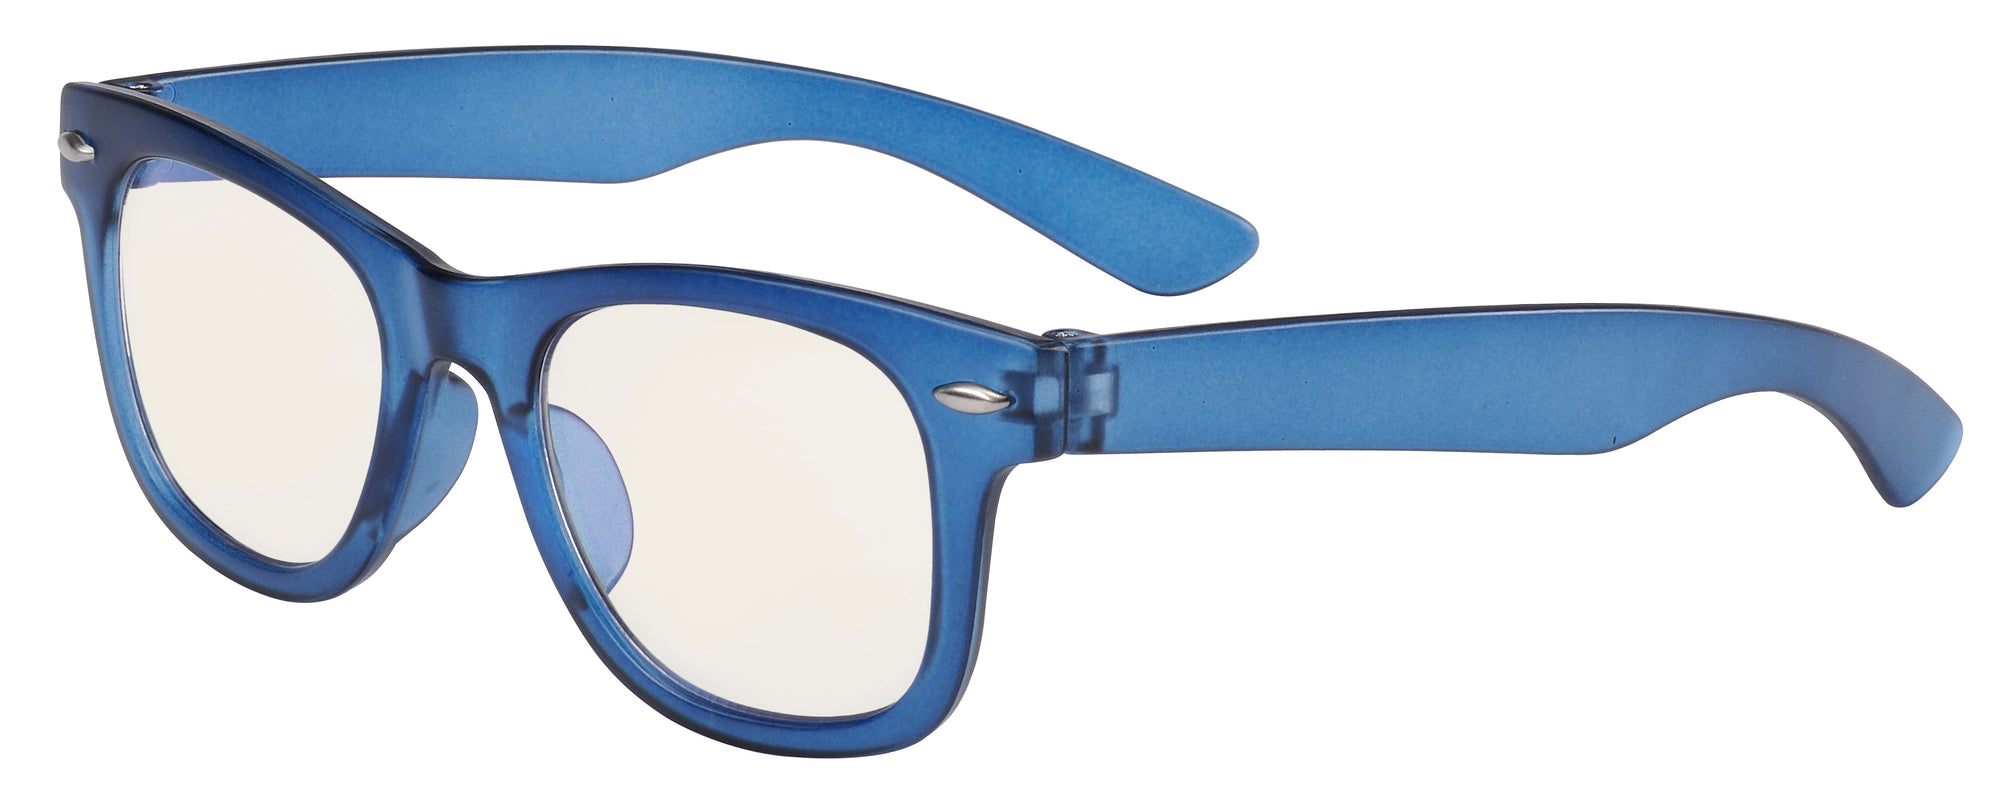 Digital Blue Light Blocking Glasses Blue TEEN / TWEEN